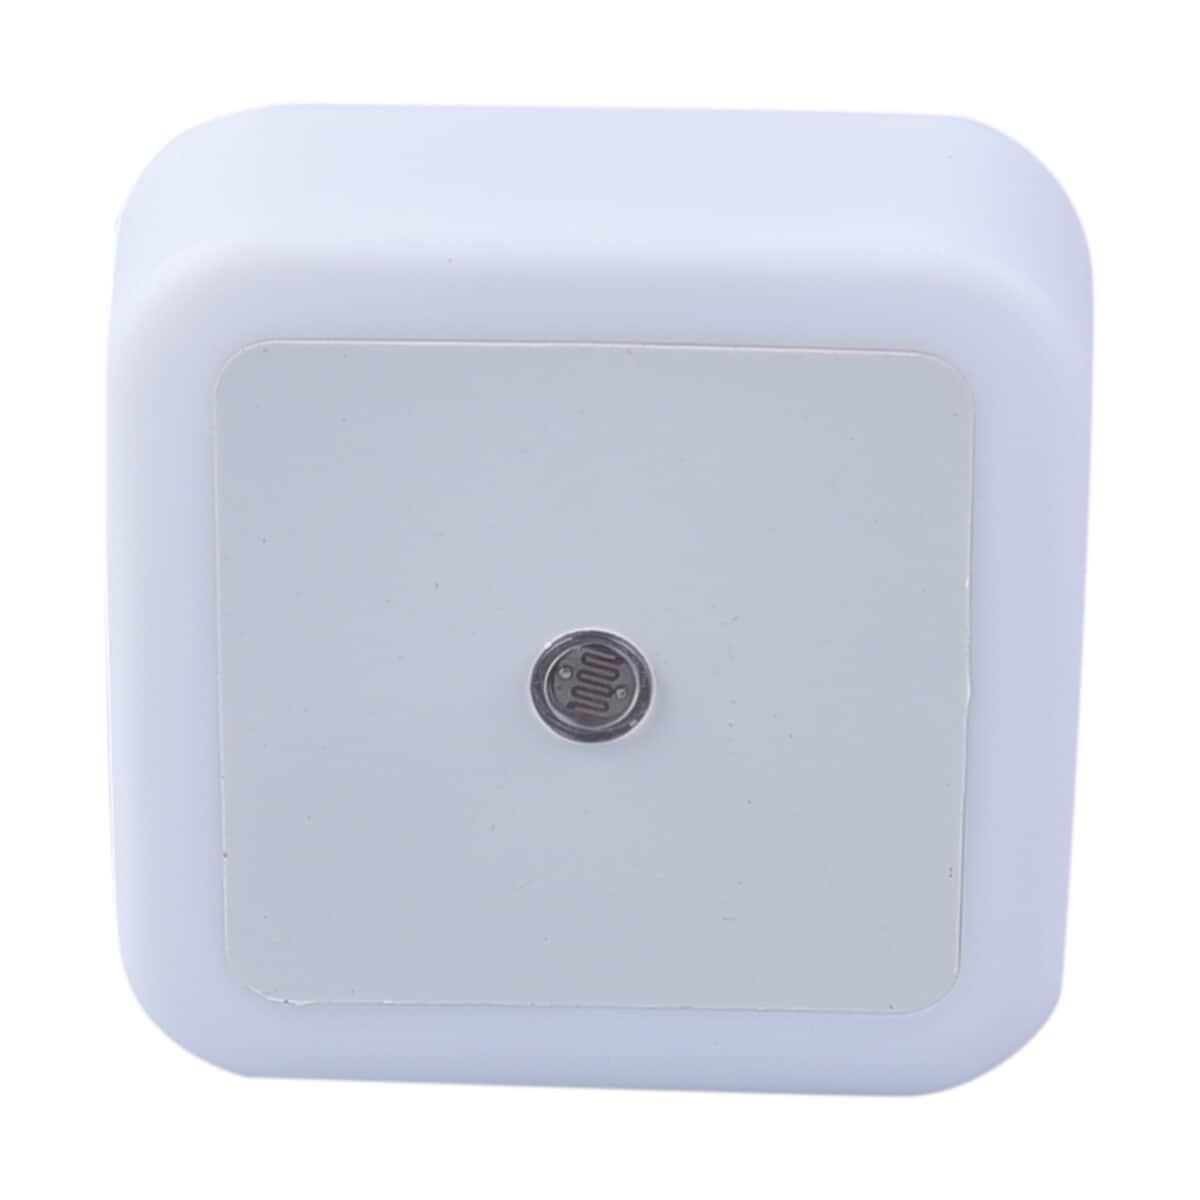 Set of 6 White Square Plug-in Night LED Light with Sensitive Light Sensor image number 0